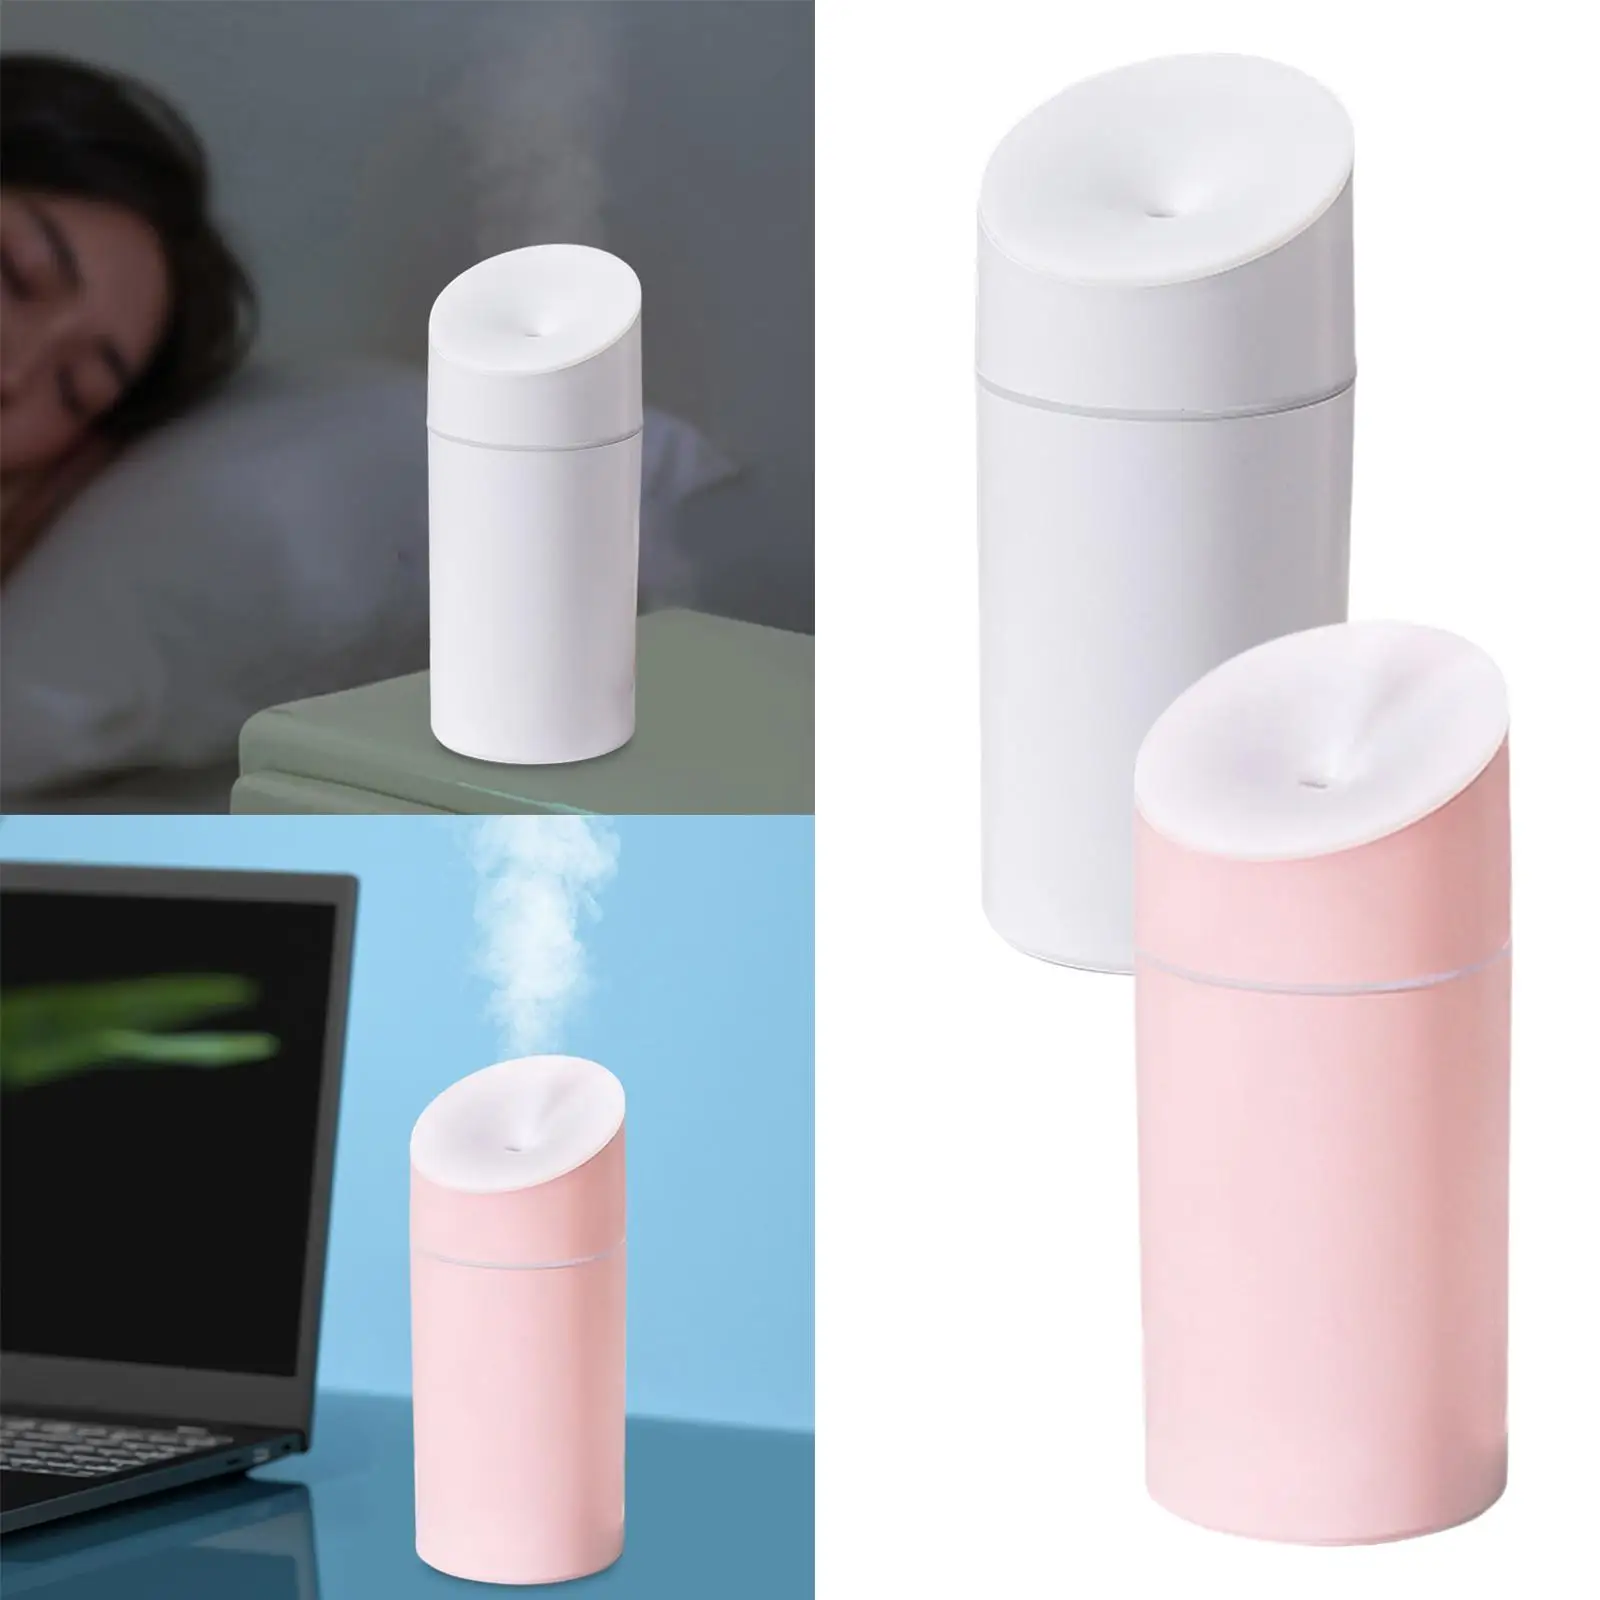 Portable Air Humidifier USB Night Lamp Fogger mist Adjustable Mist Mode for Desk